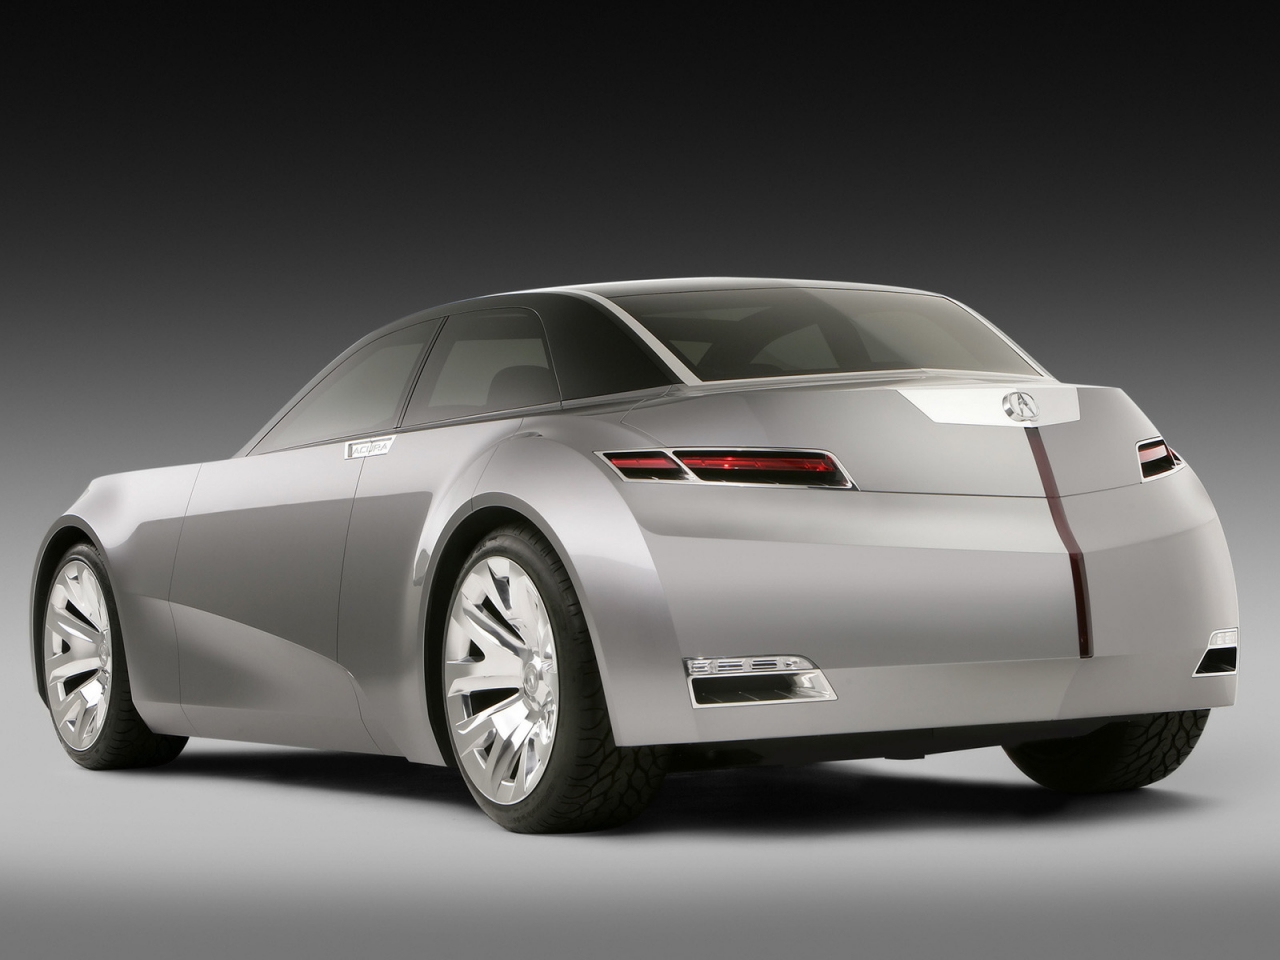 Acura Sedan Concept Rear for 1280 x 960 resolution